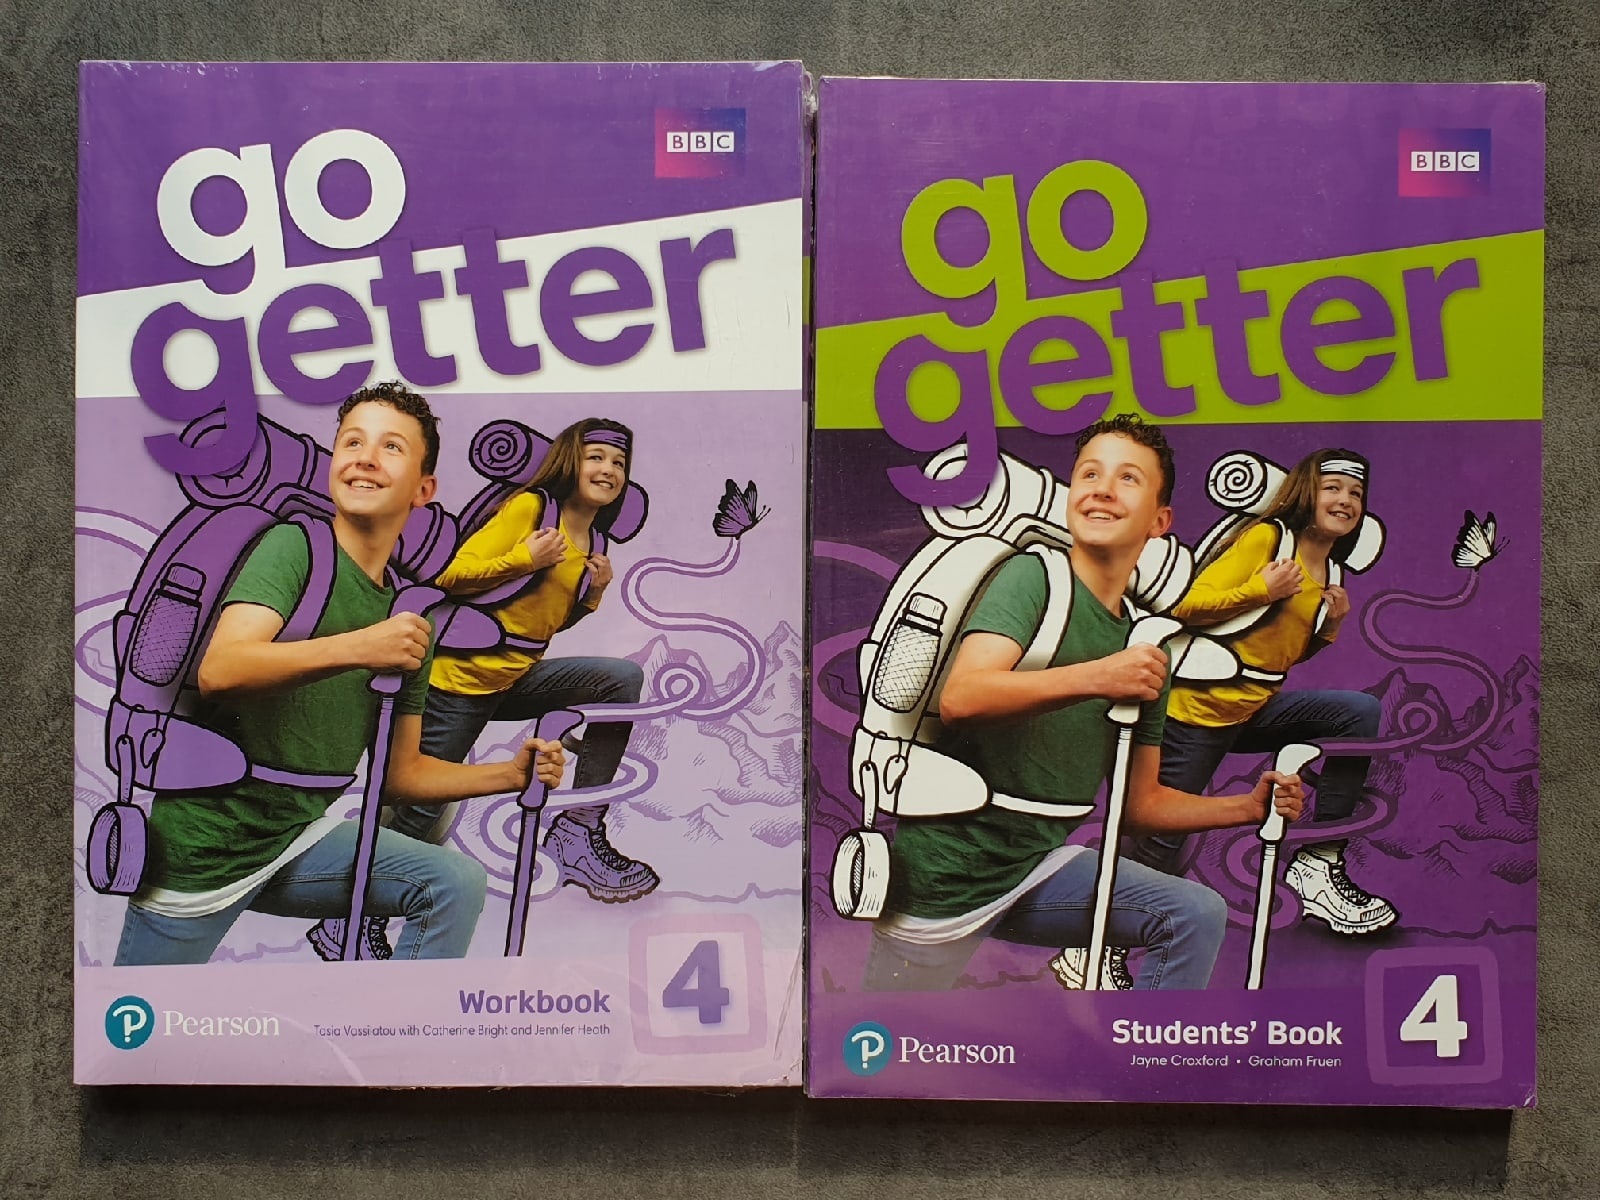 Go getter английский workbook ответы. Учебник Pearson go Getter. Go Getter 1 Workbook. Go Getter 3 student's book. Учебник go Getter 4.